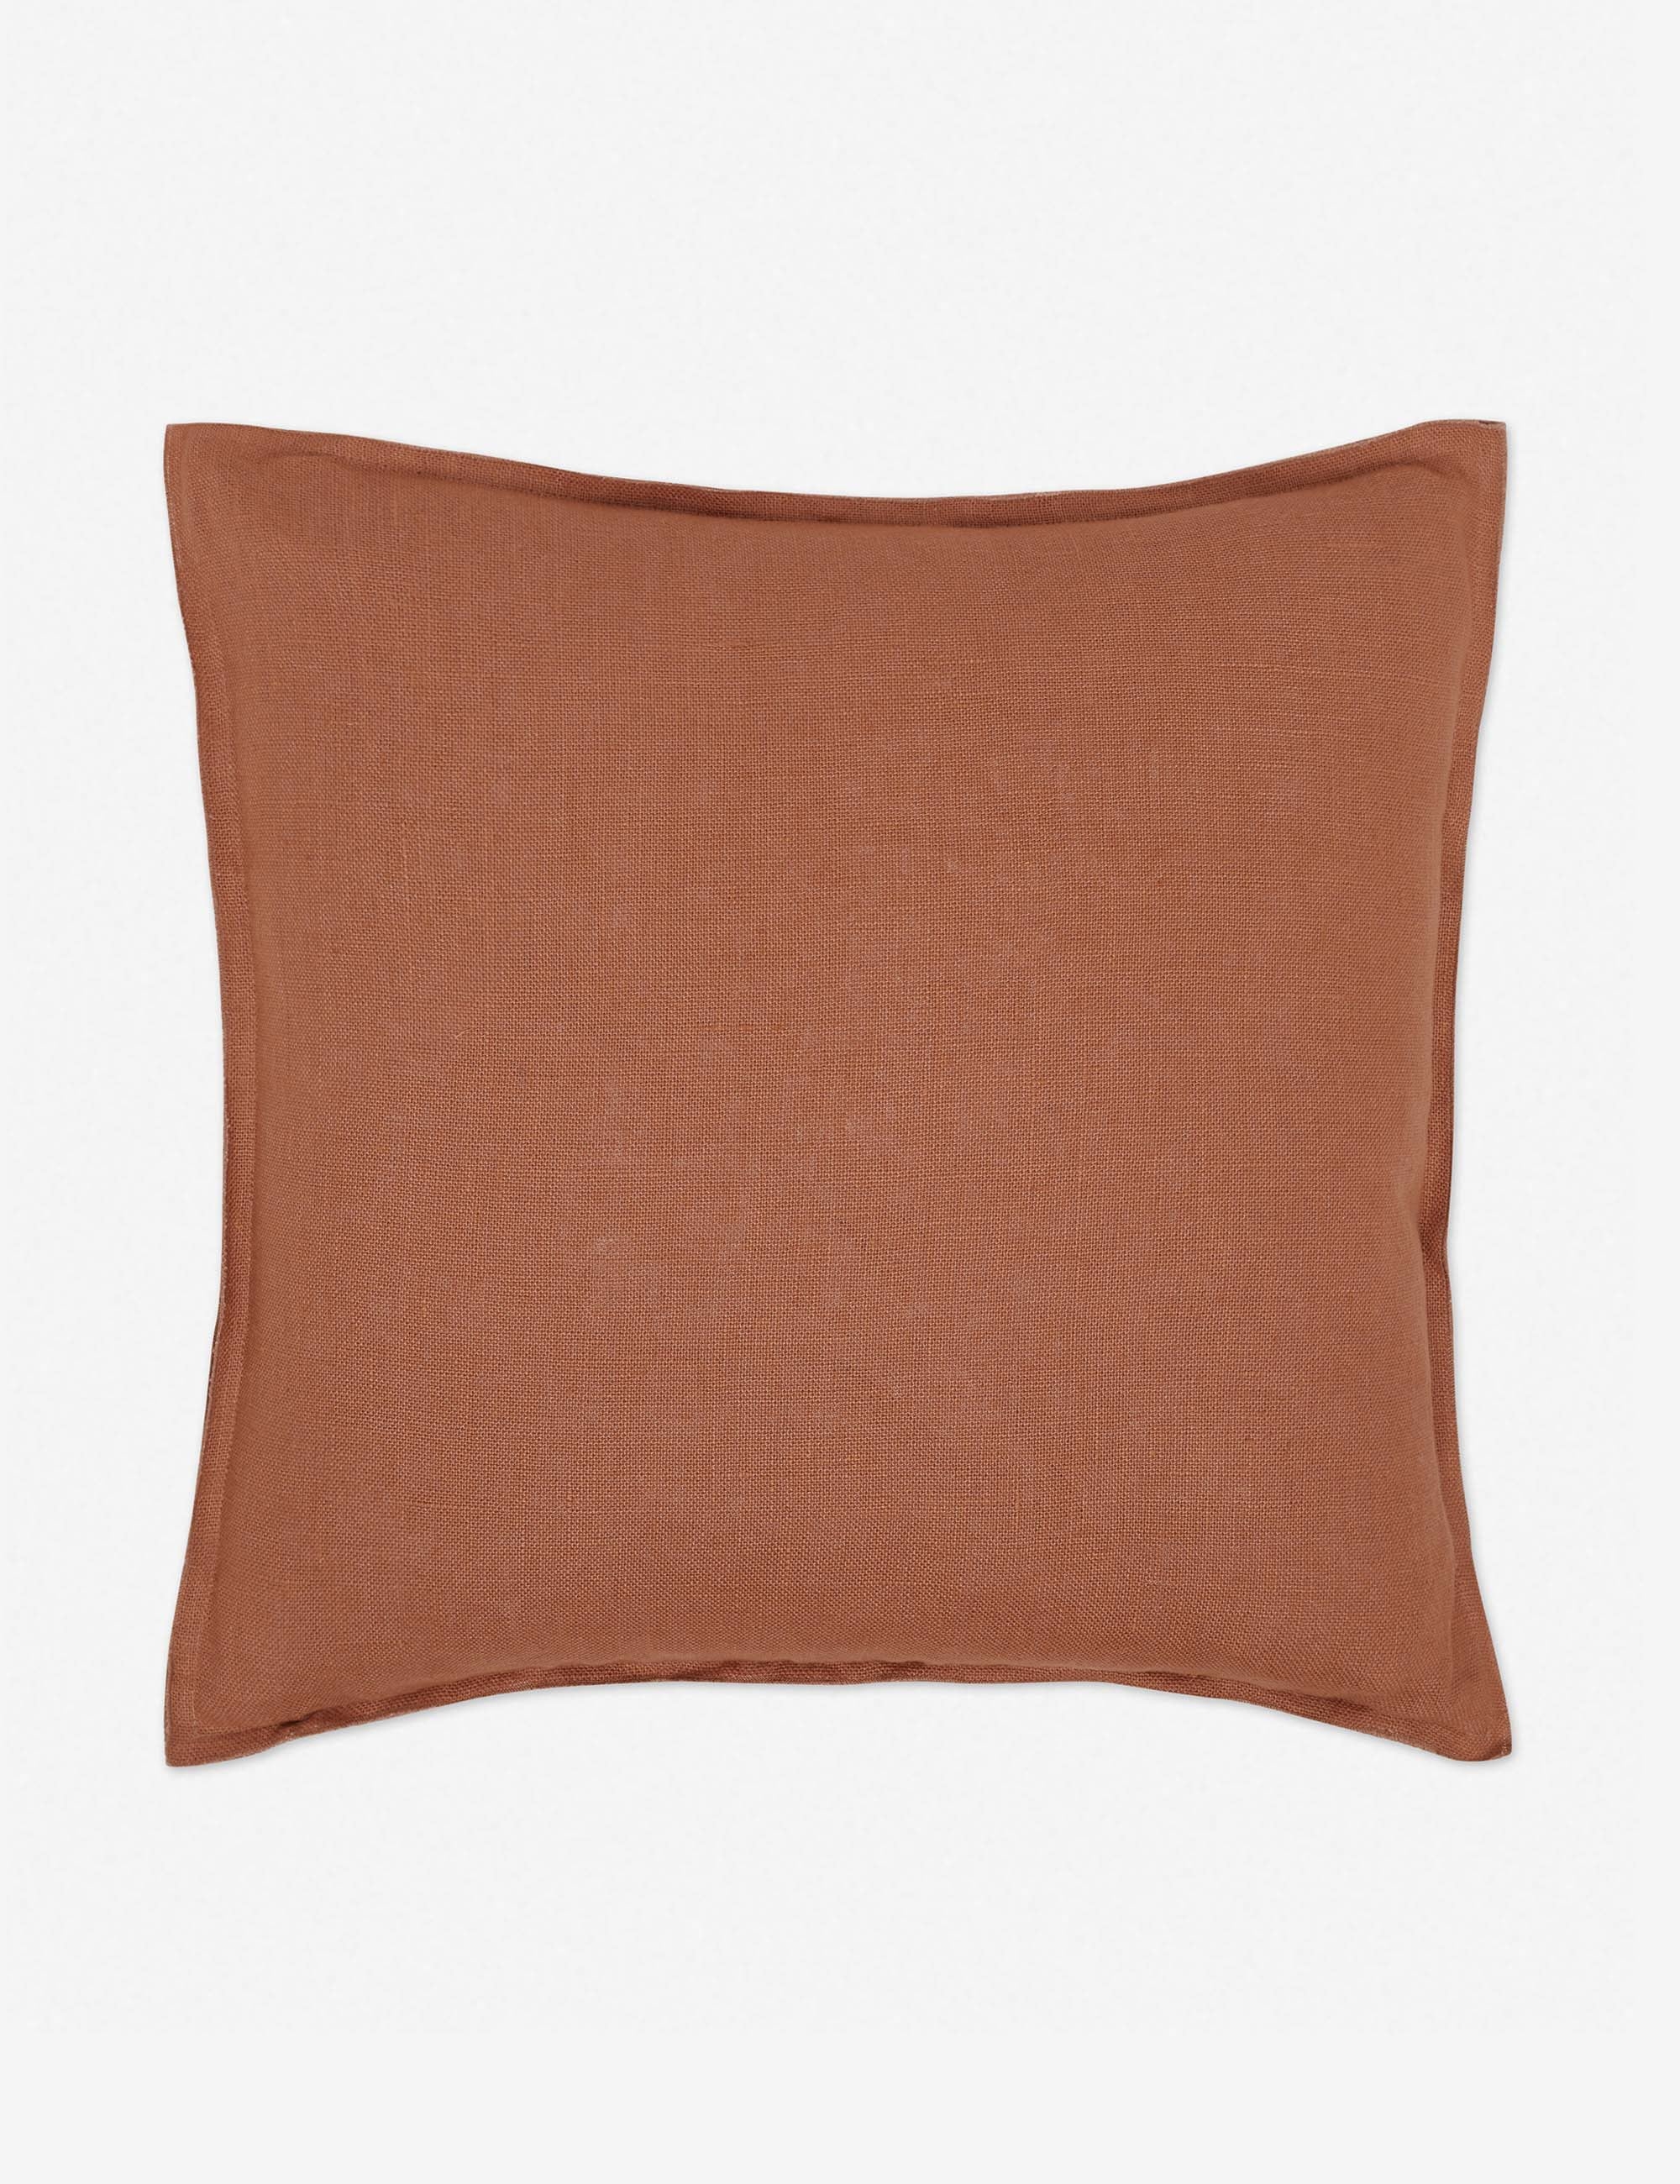 Arlo Linen Pillow - Aubergine / 13" x 20" - Image 1